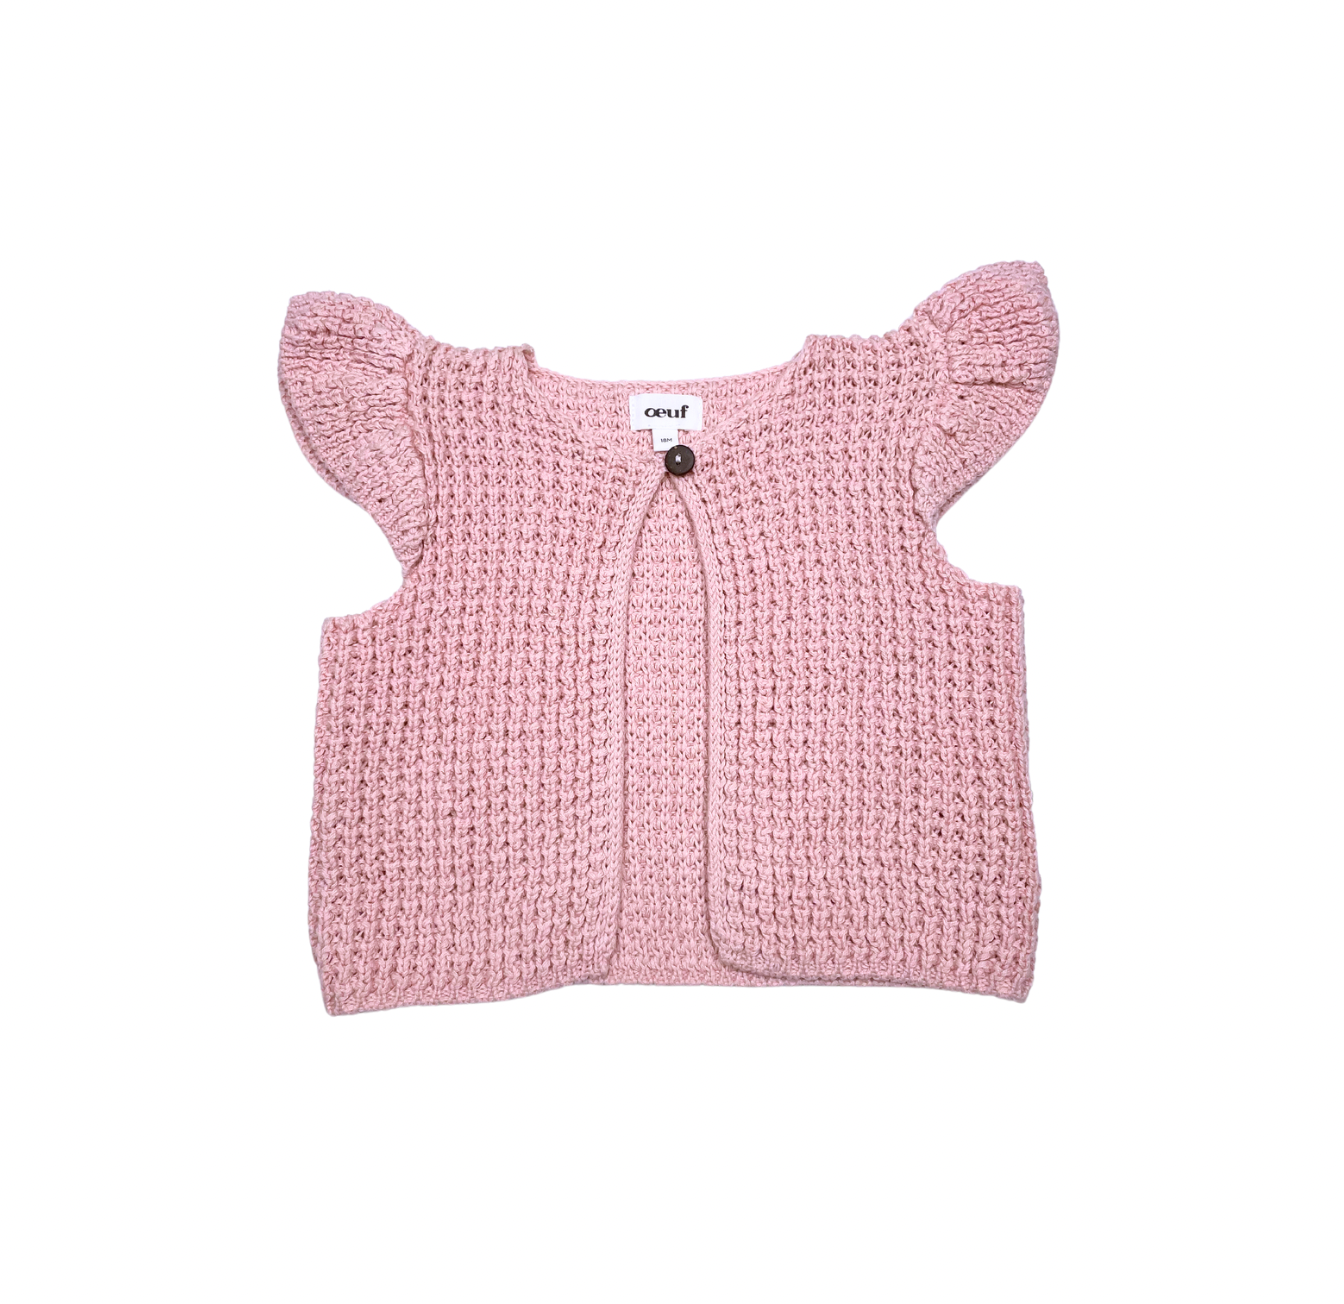 OEUF NYC - Veste en crochet rose - 18 mois